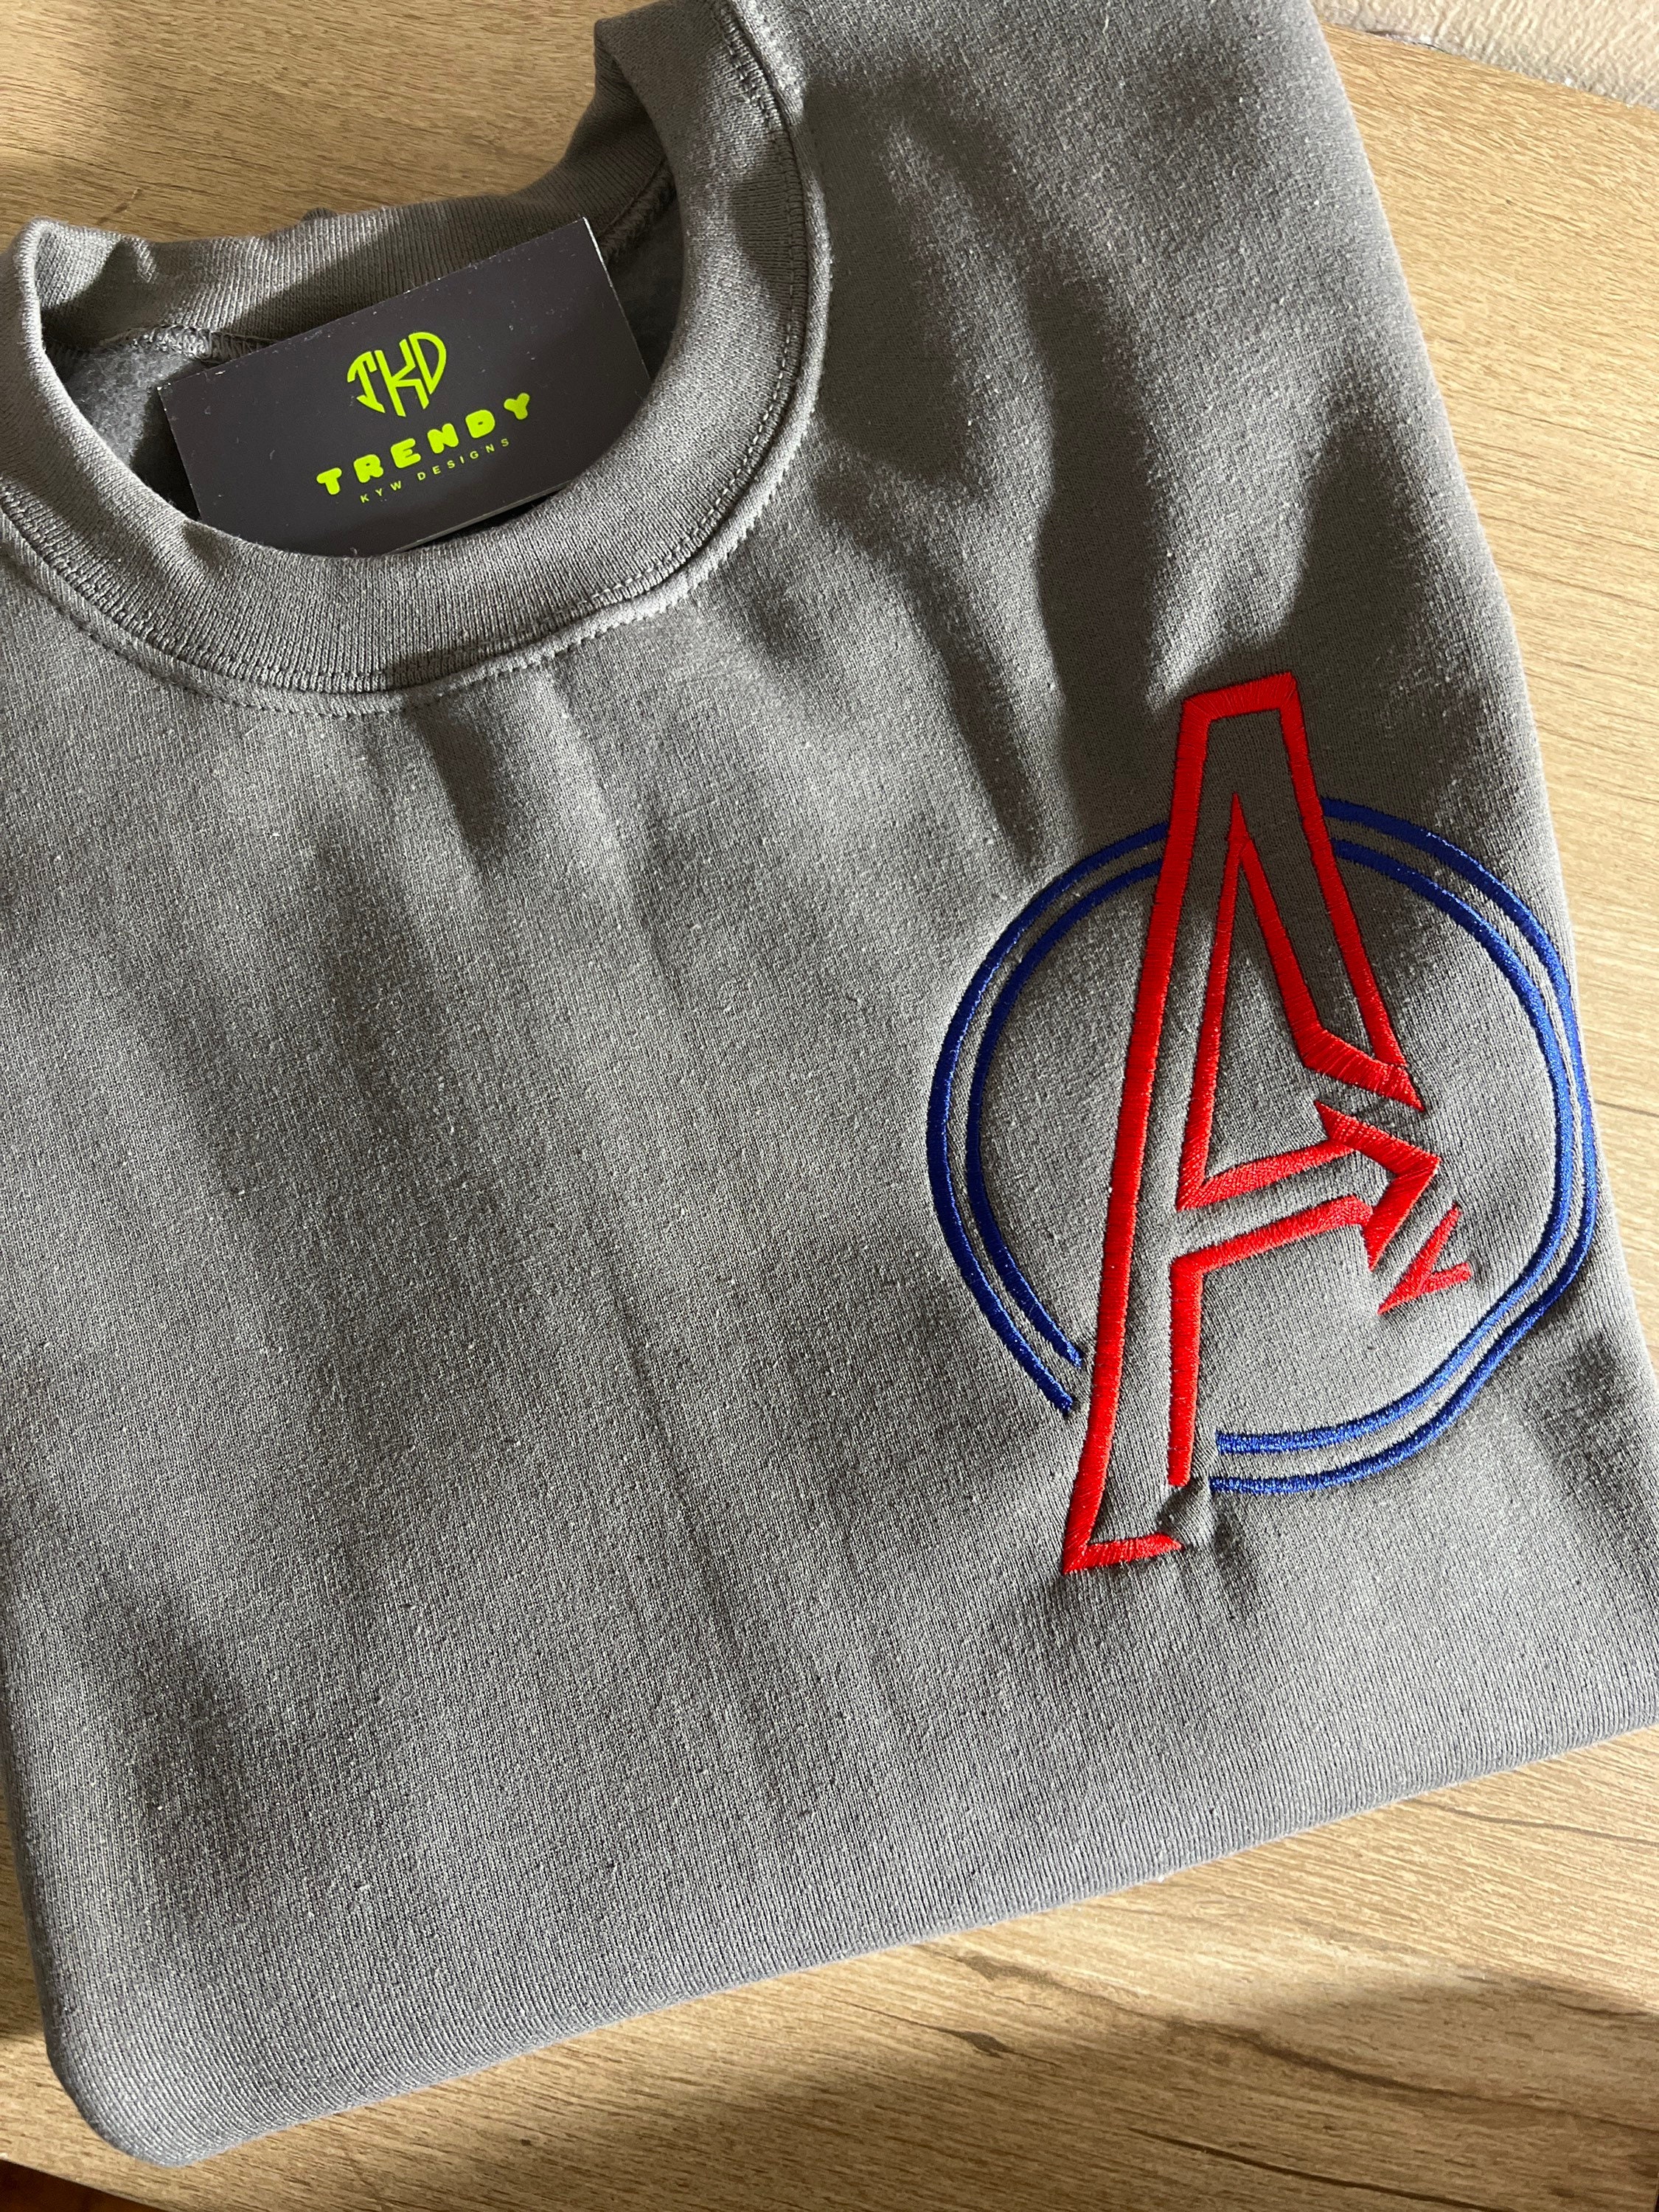 - Etsy Embroidered Avengers Sweatshirt